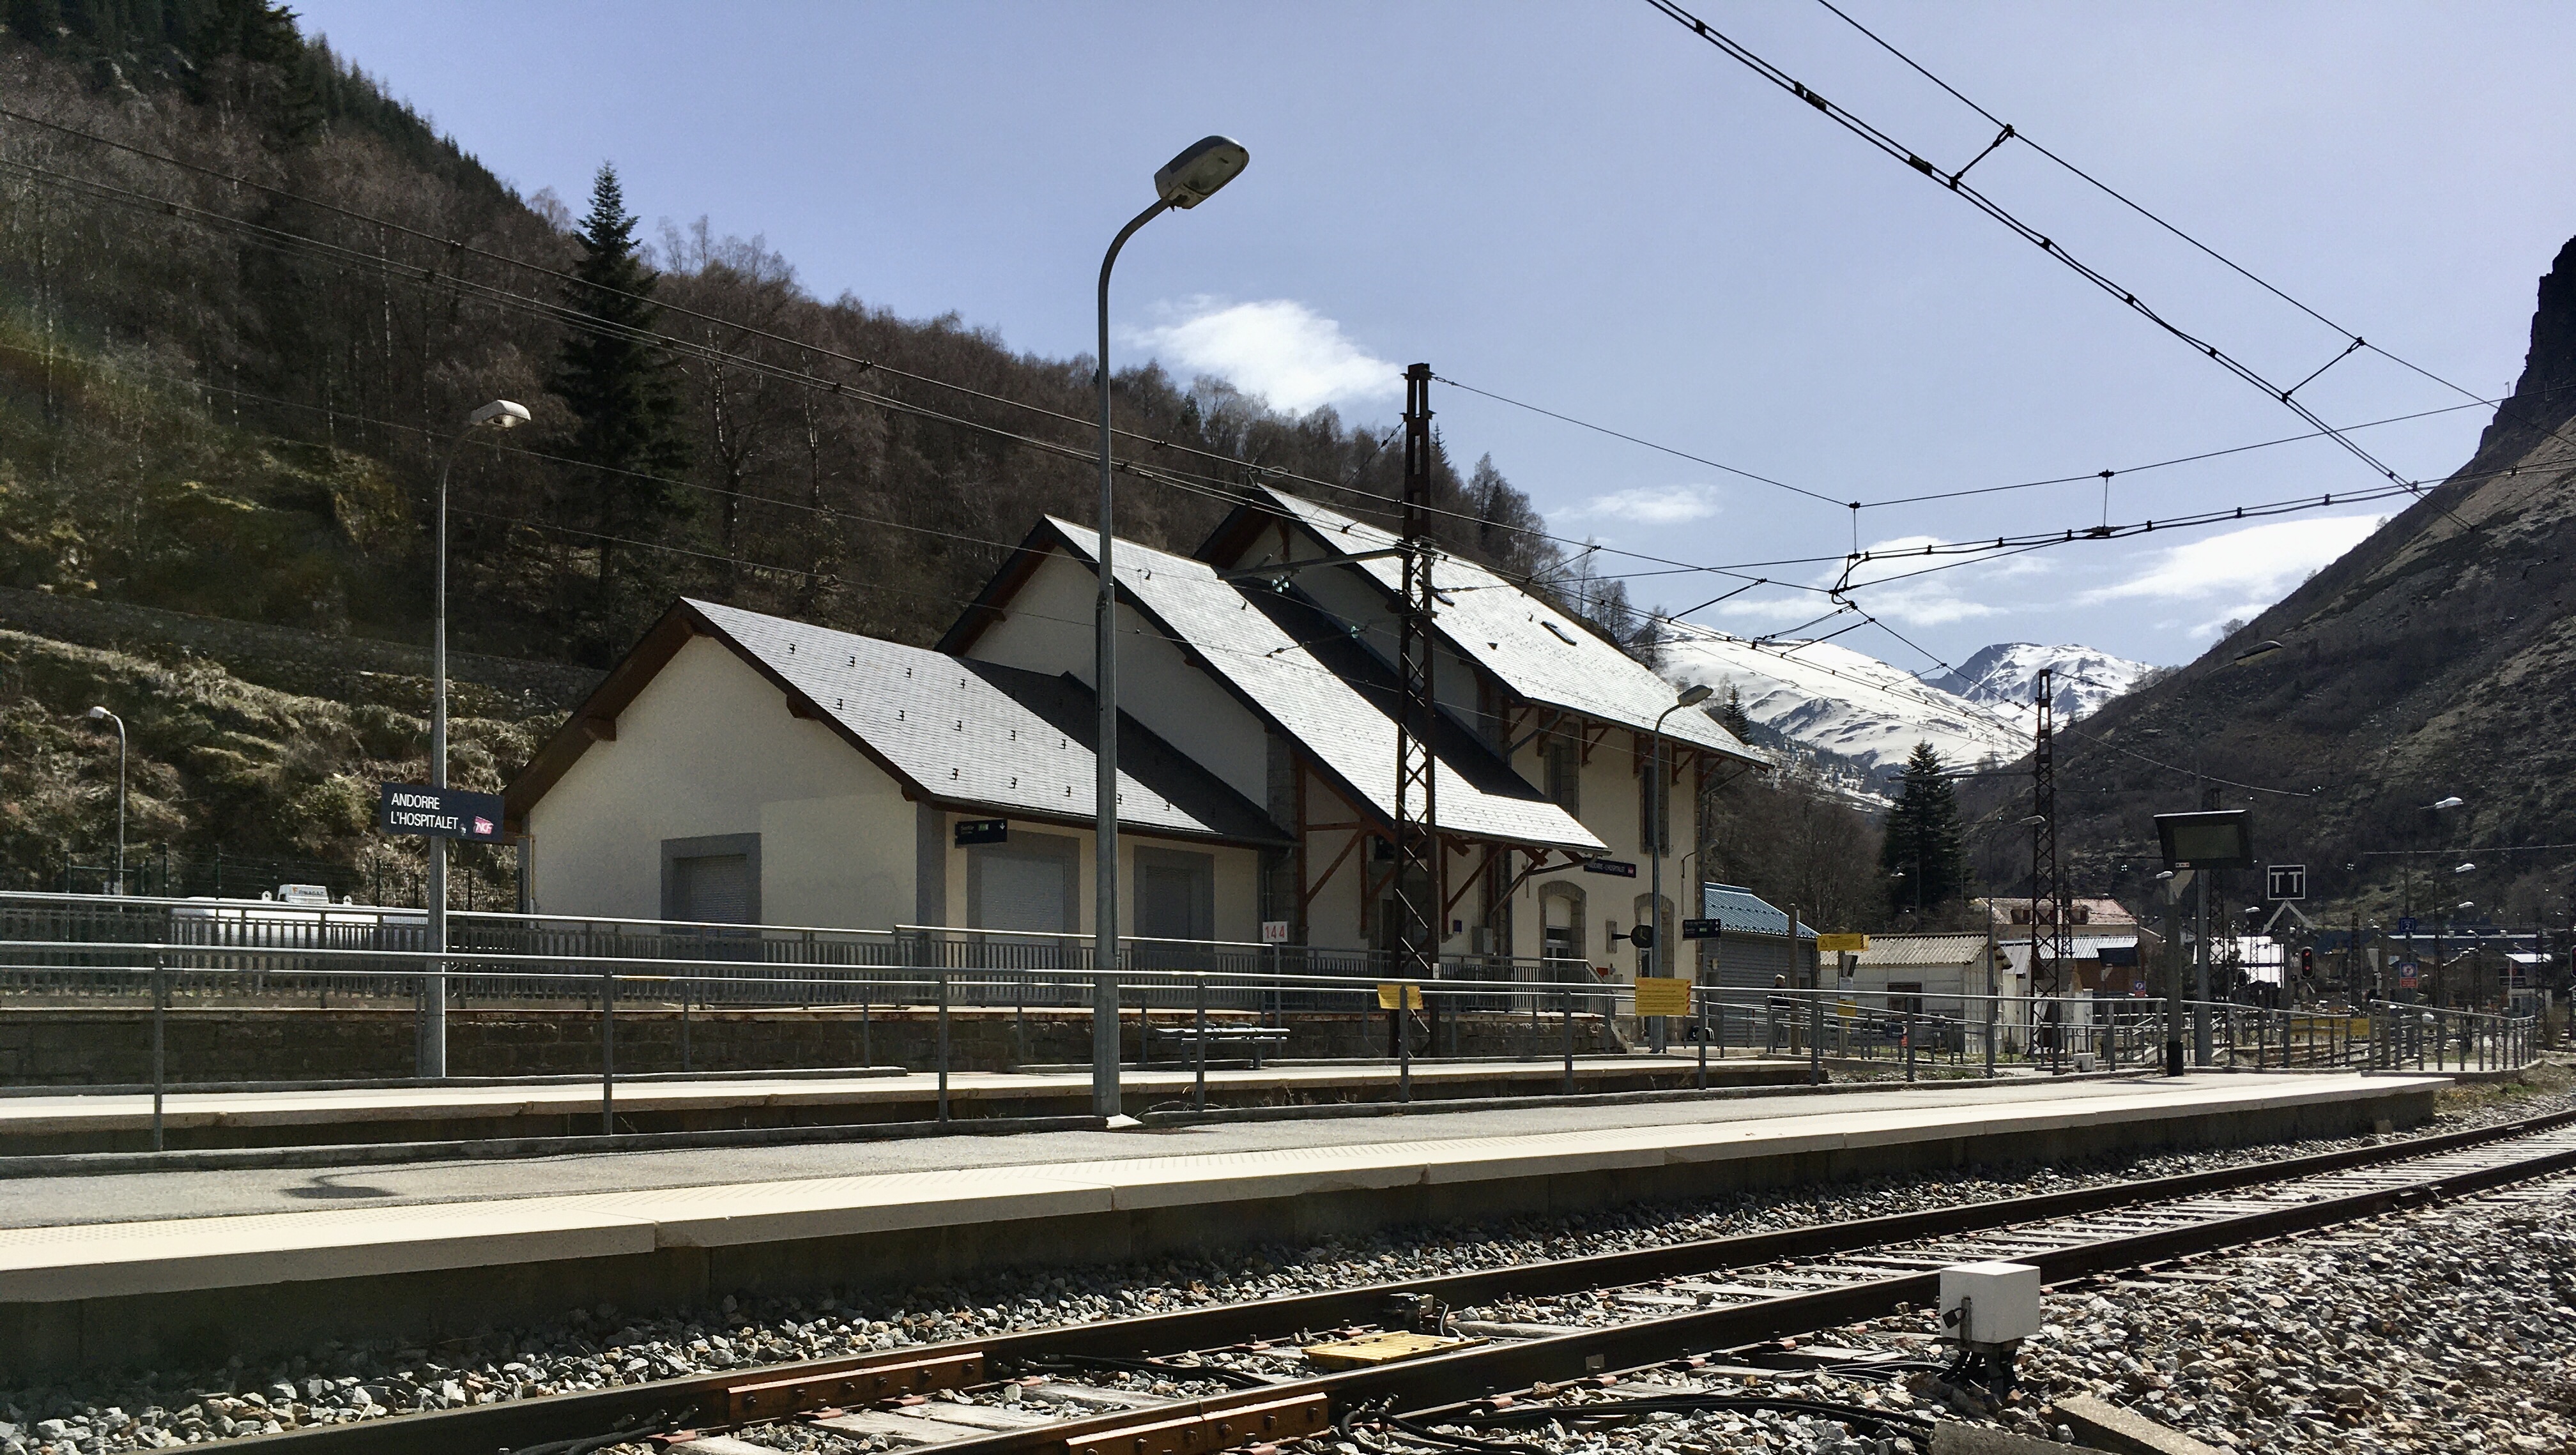 Monday Morning Blues – Andorre l’Hospitalet Train Station in
France